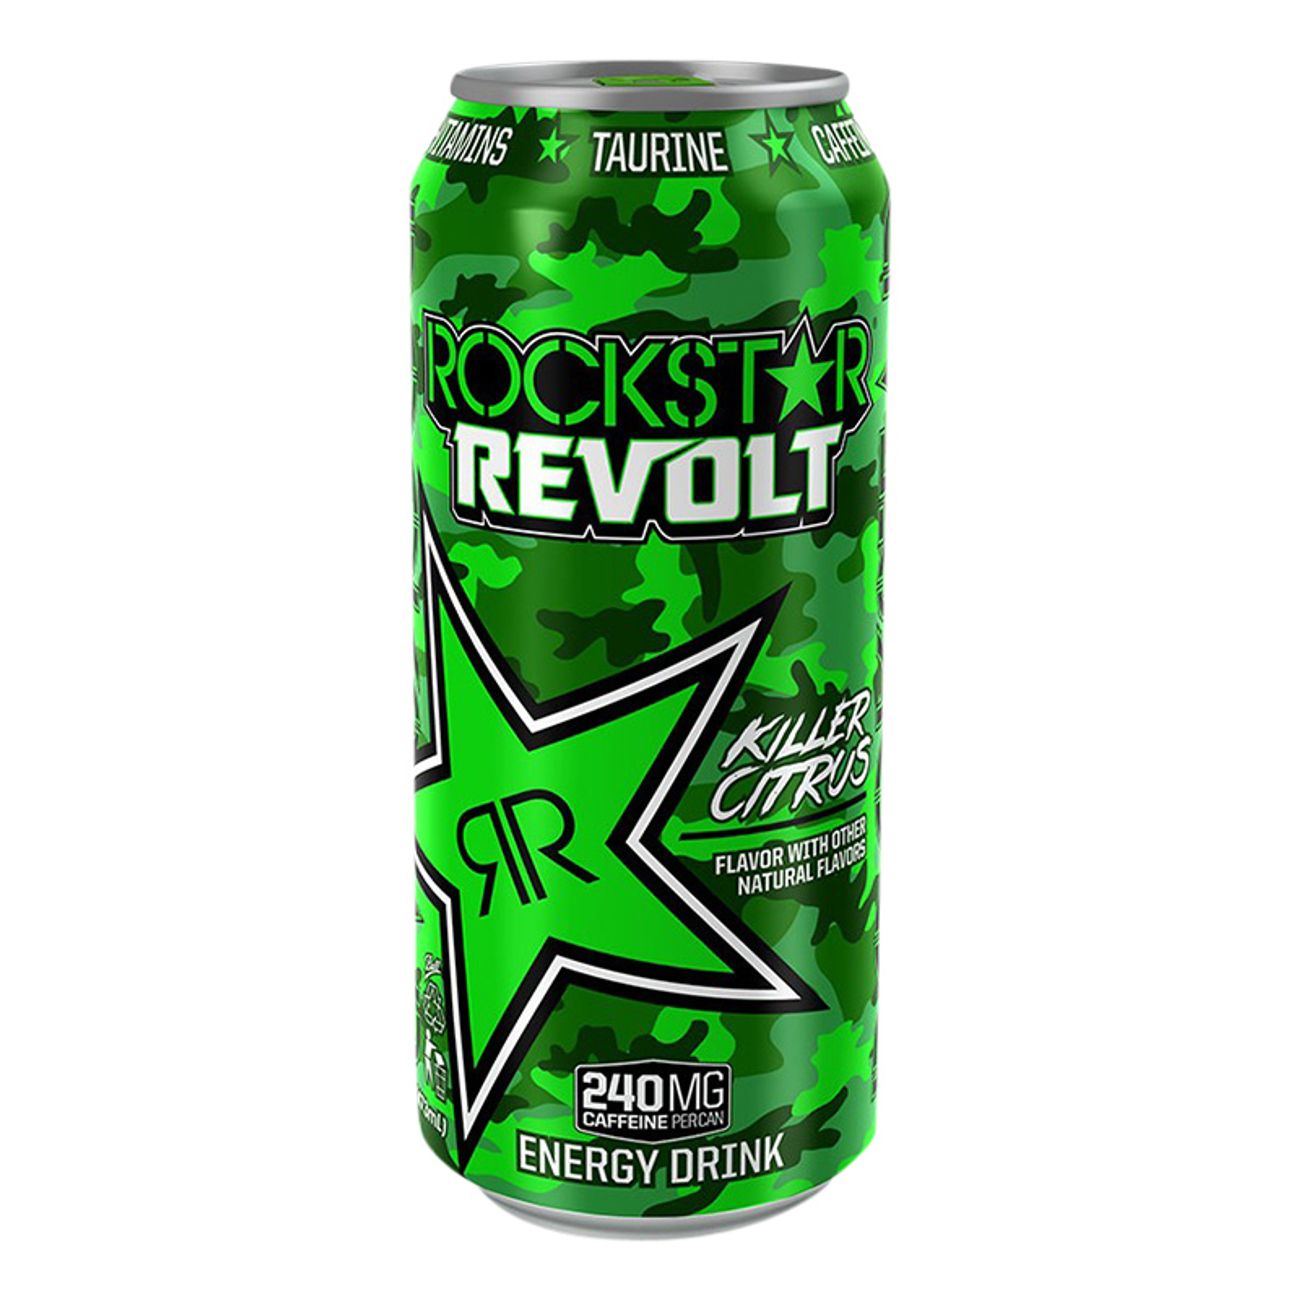 rockstar-revolt-killer-citrus-zero-4